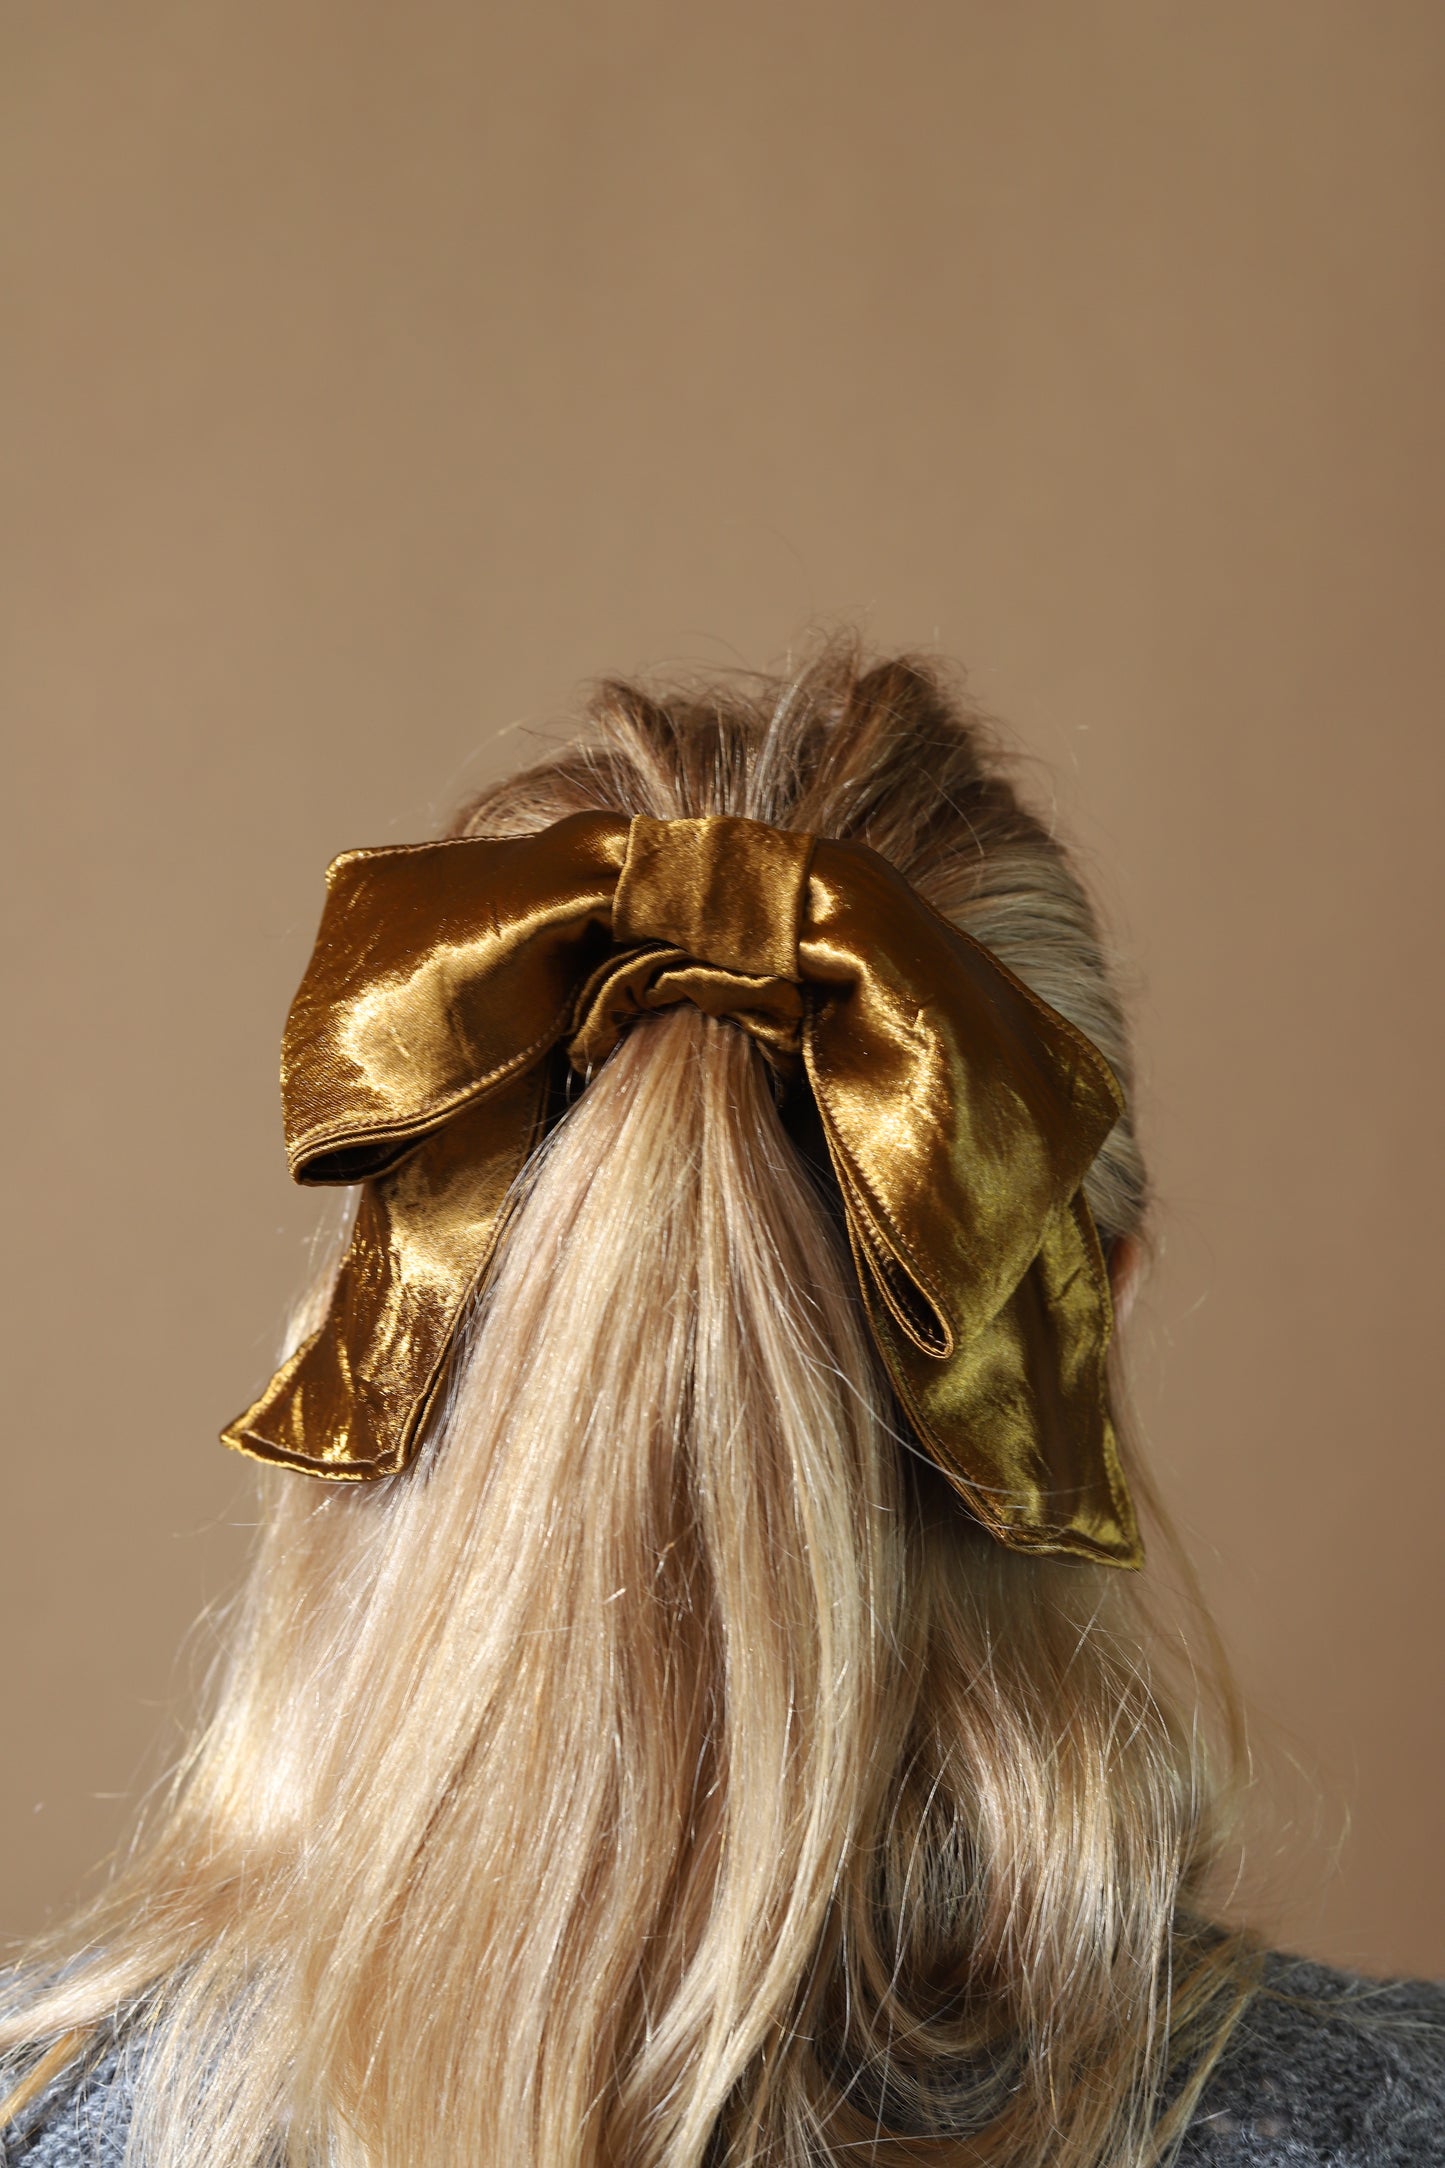 Maddy bow scrunchie in metallic bronze